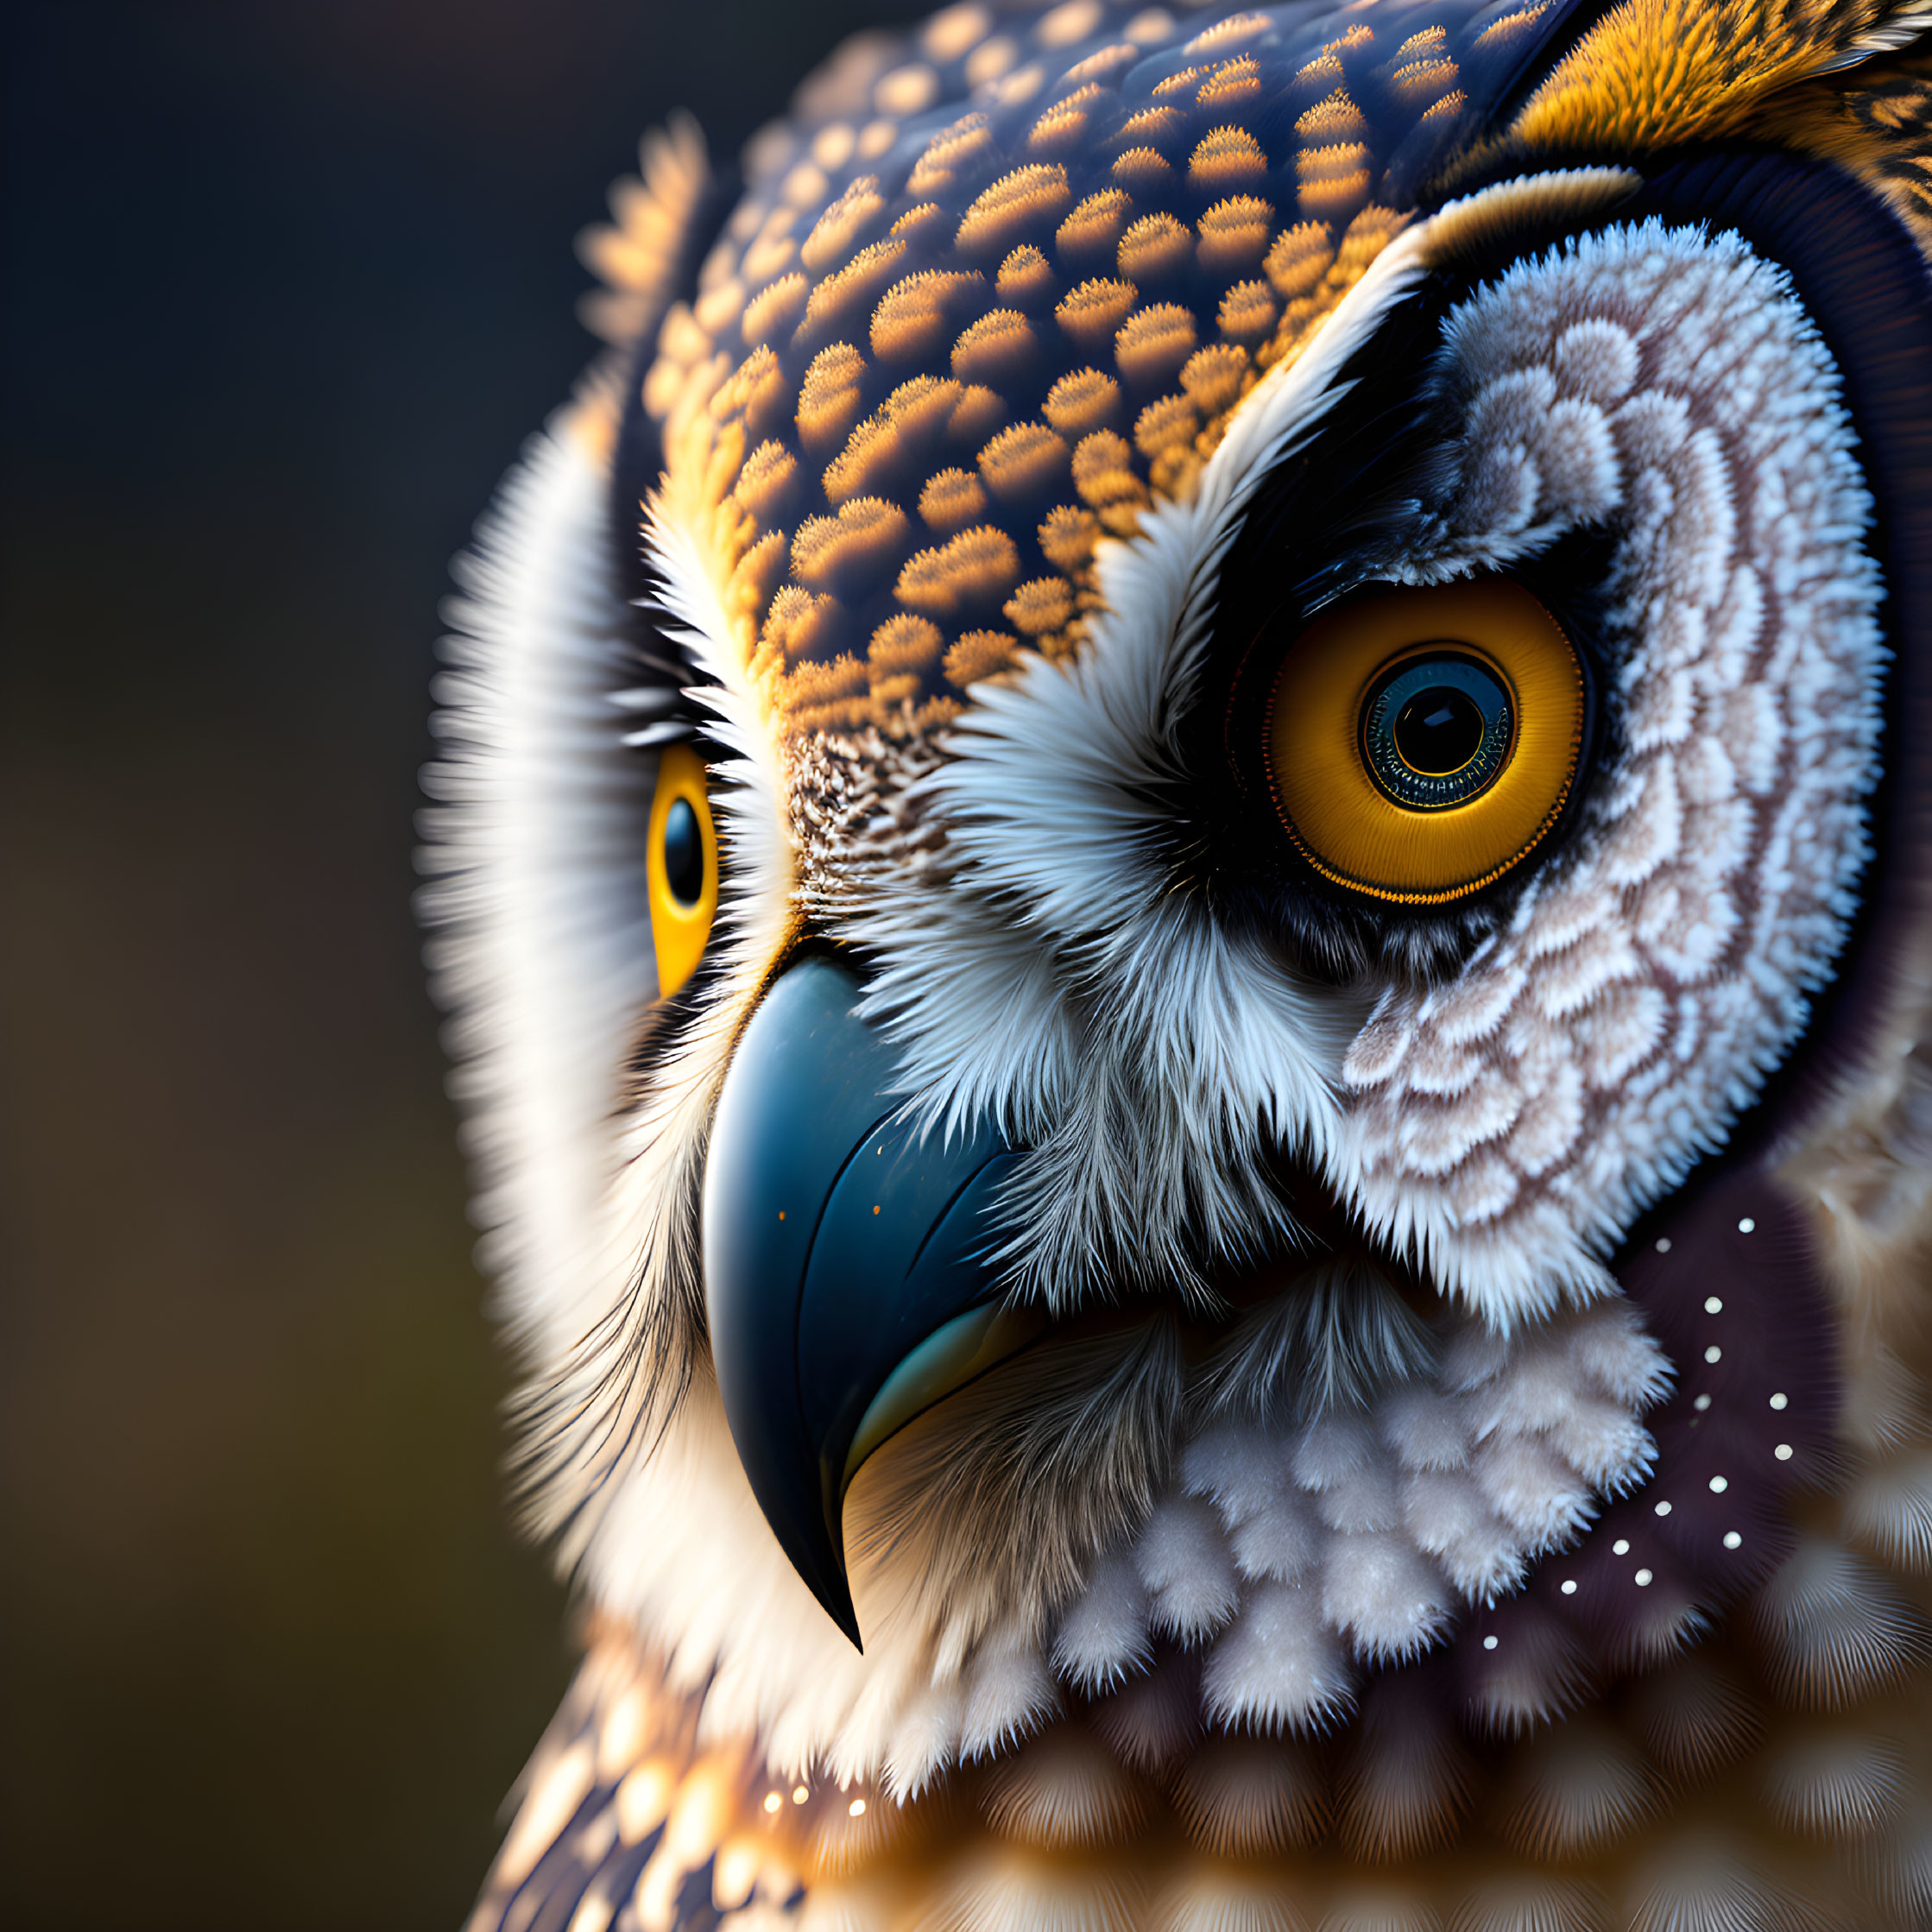 Wise ole Owl